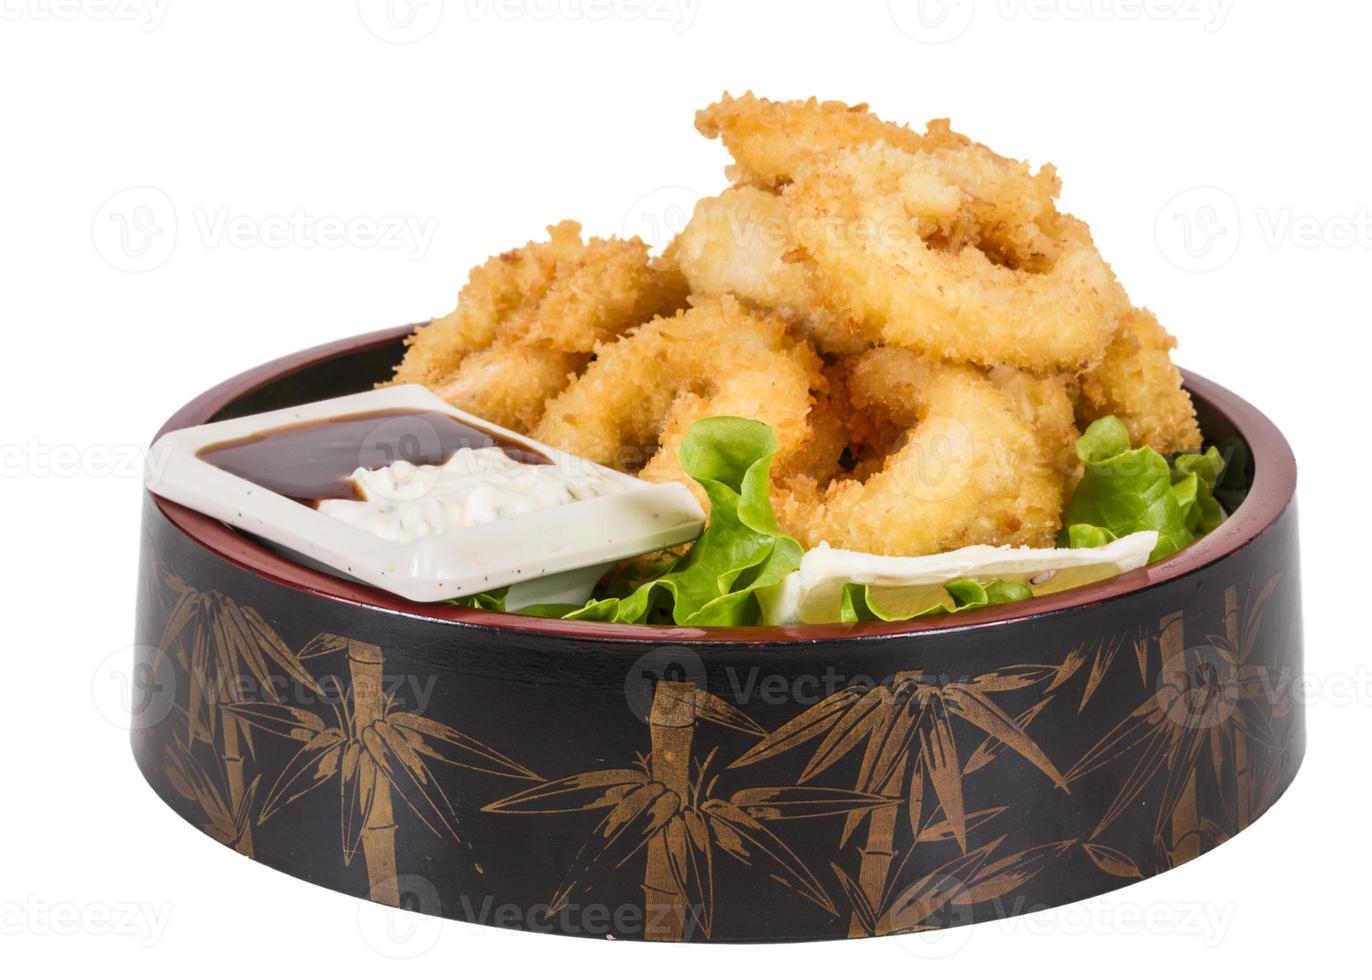 diep beslag gefrituurde inktvisringen calamares met groene salade foto